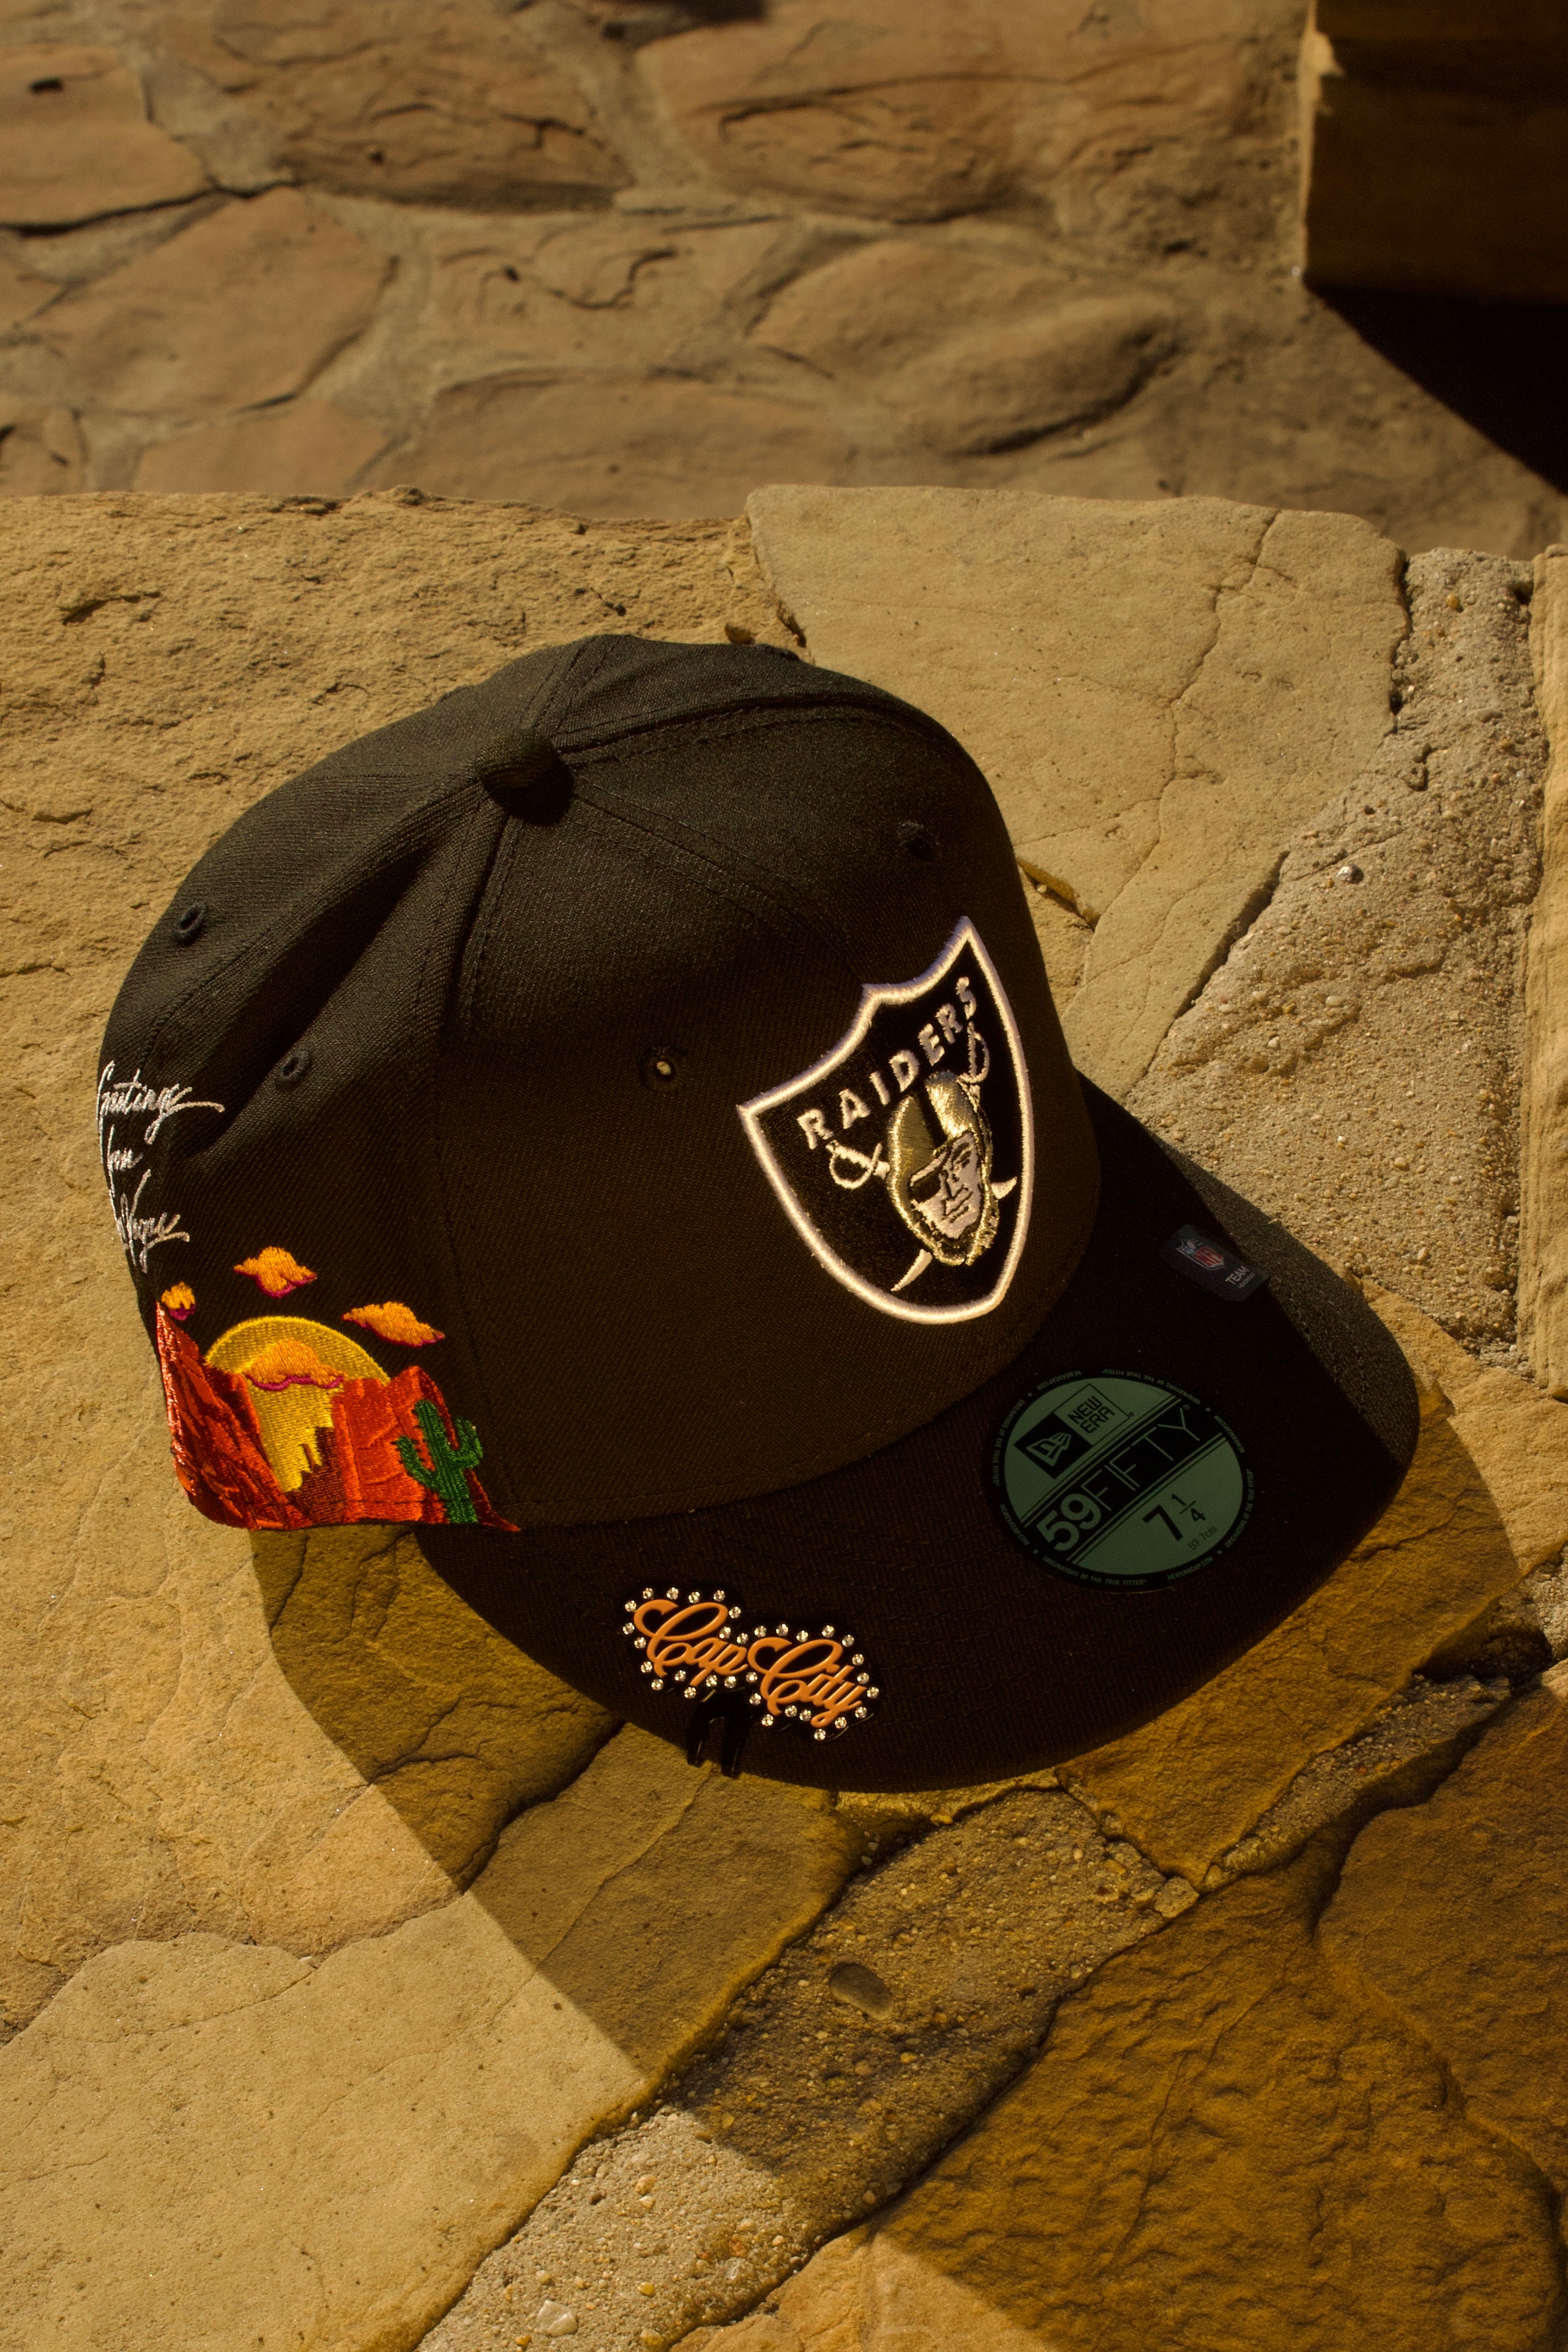 Buy the 59FIFTY cap from Las Vegas Raiders - Brooklyn Fizz